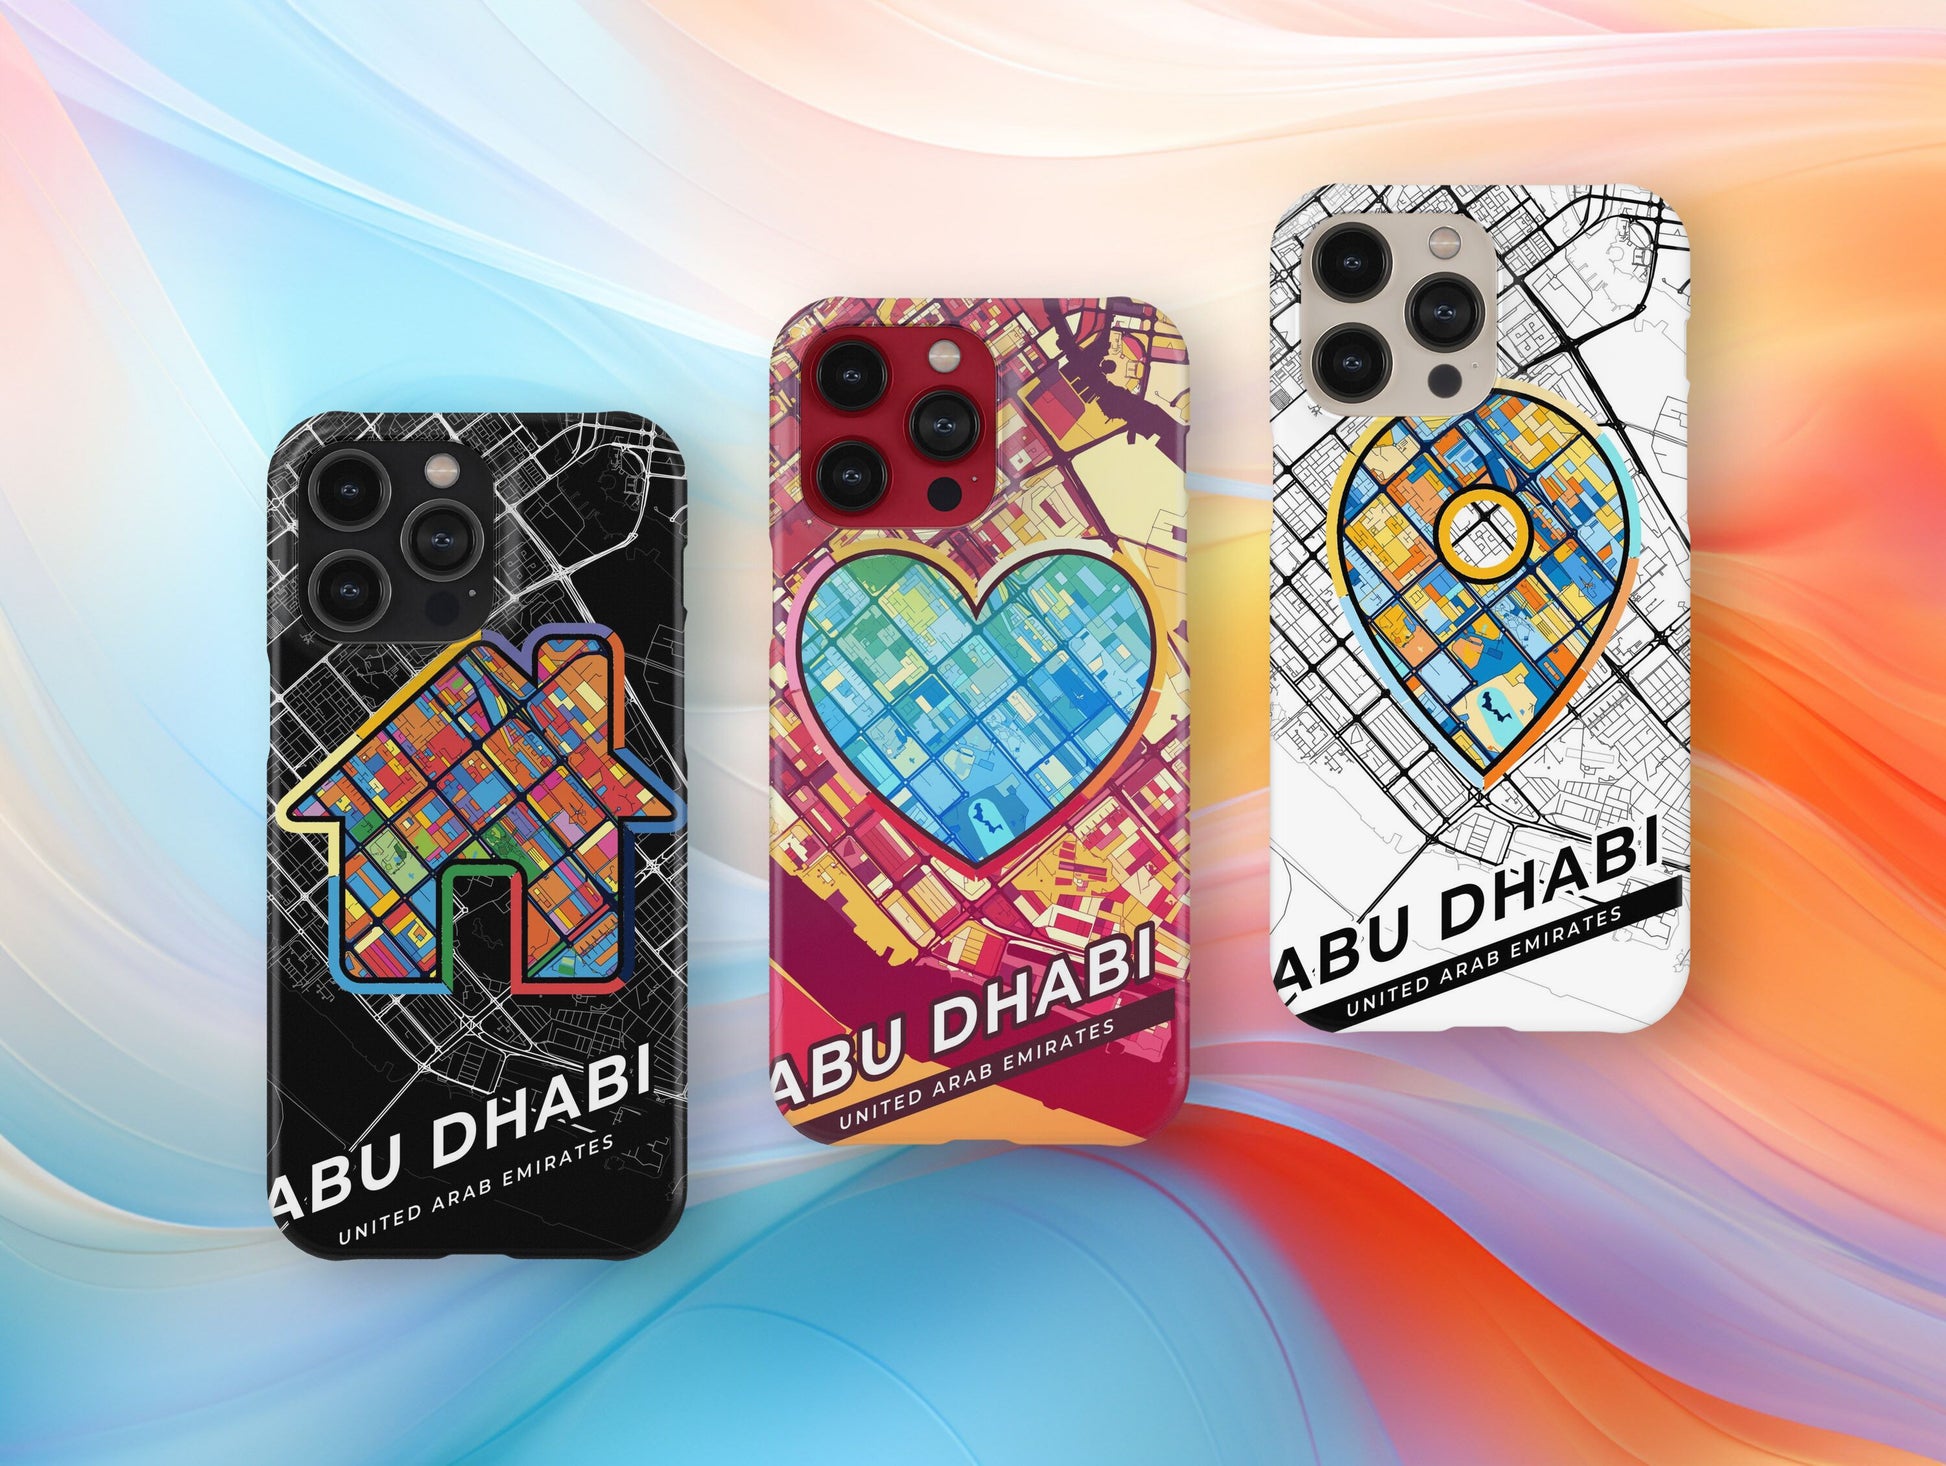 Abu Dhabi United Arab Emirates slim phone case with colorful icon. Birthday, wedding or housewarming gift. Couple match cases.